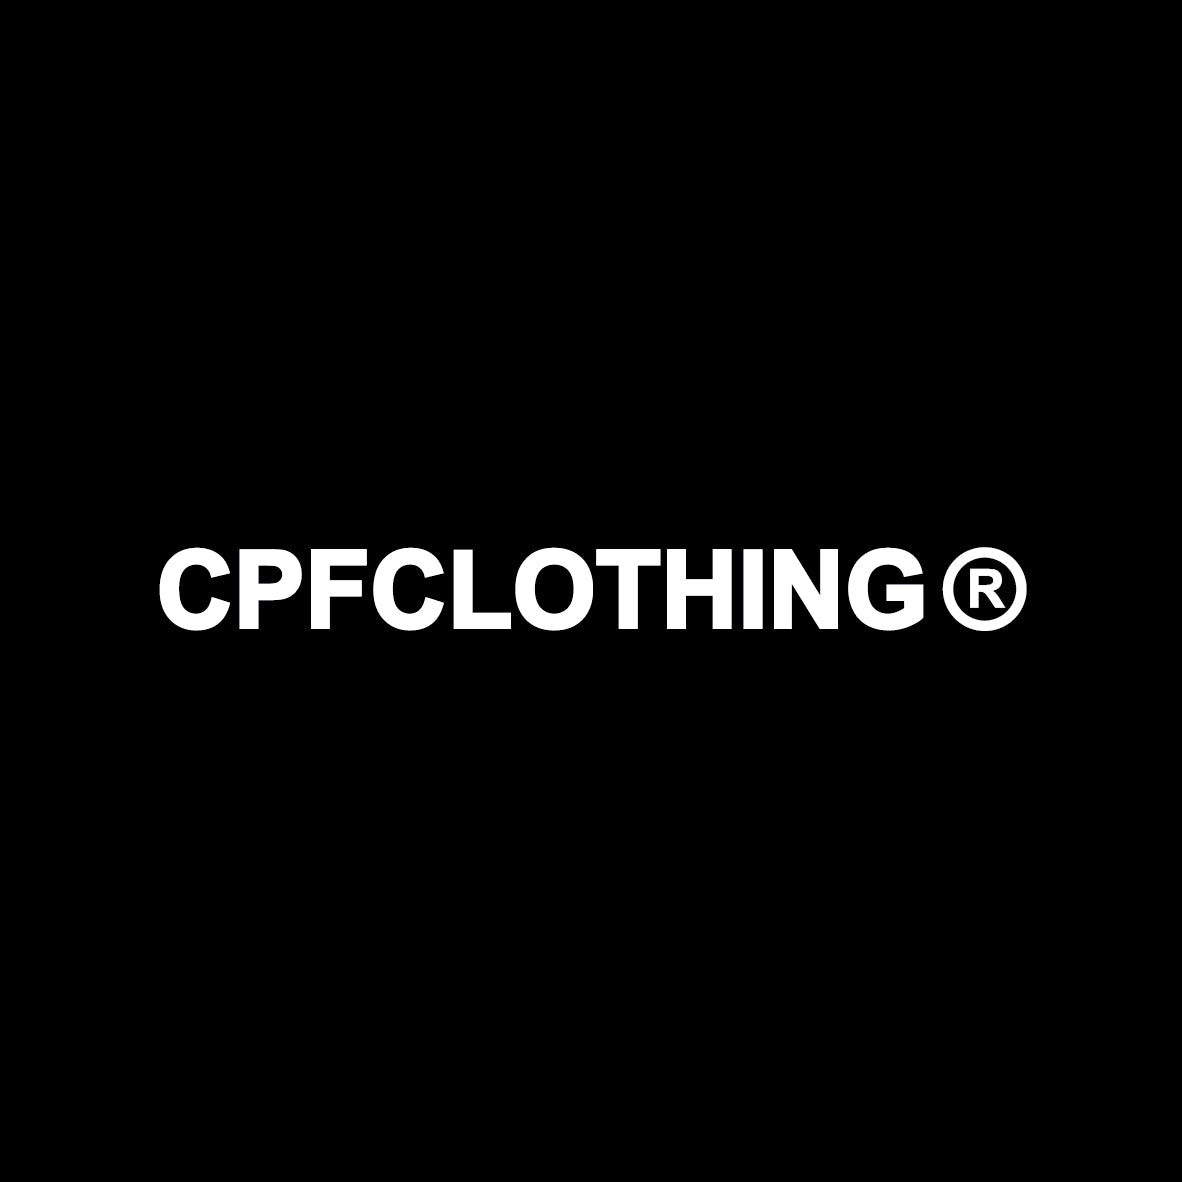 CPF CLOTHING